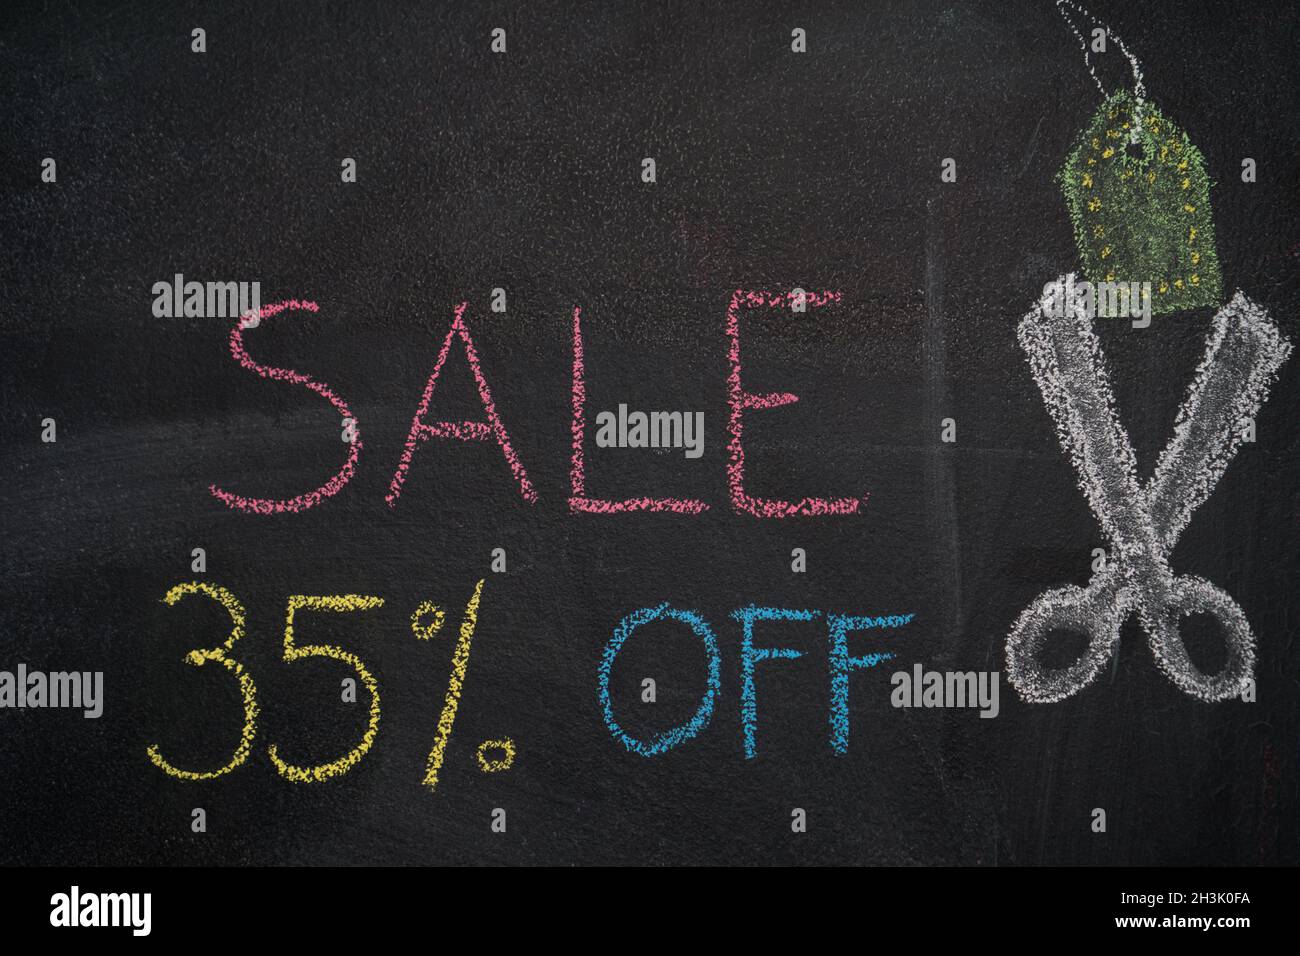 Sale 35% off on chalkboard Stock Photo